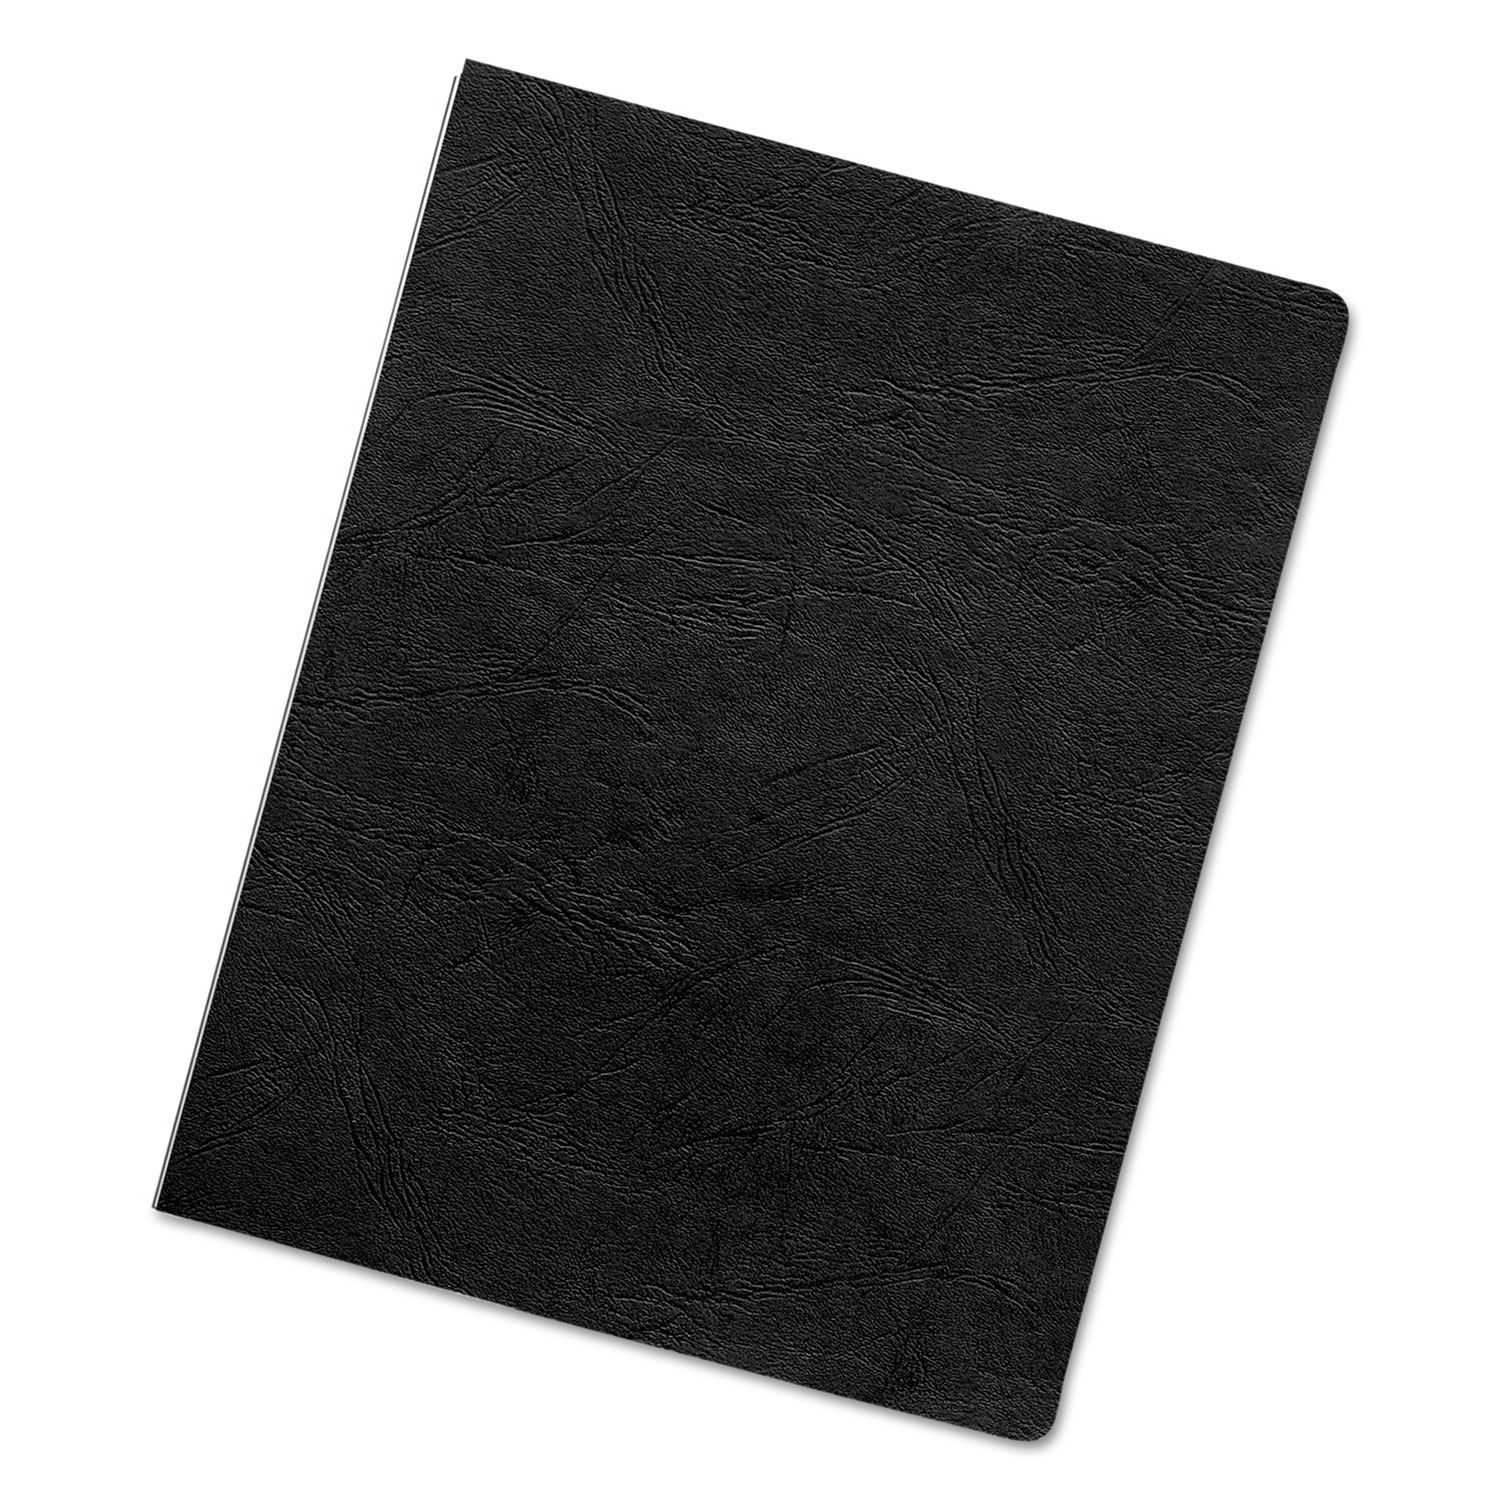  Fellowes 52149 Executive Leather-Like Presentation Cover, Round, 11-1/4 x 8-3/4, Black, 200/PK (FEL52149) 